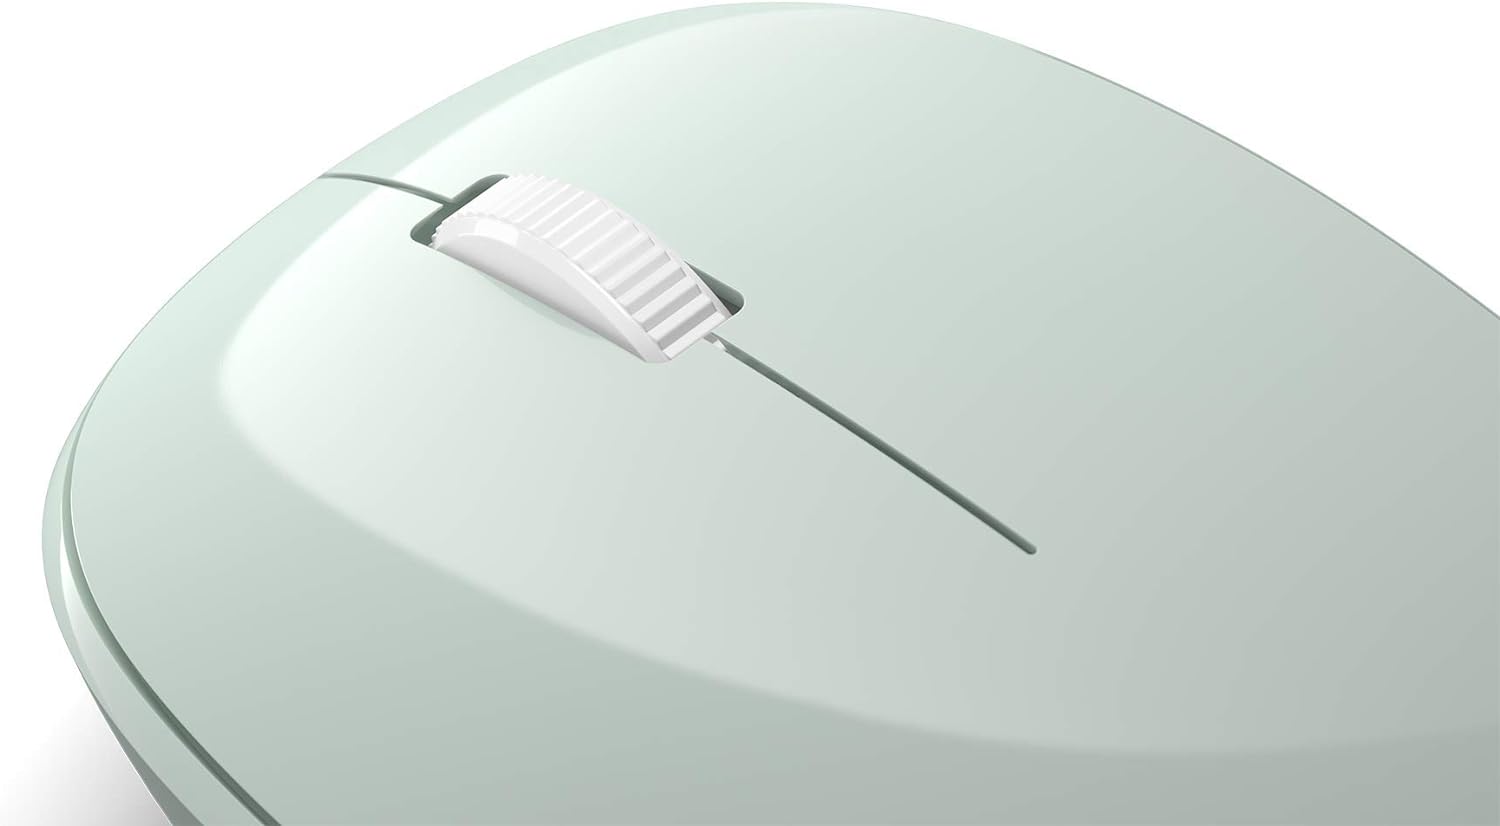 Microsoft RJN-00026 Bluetooth Mouse - Mint - New